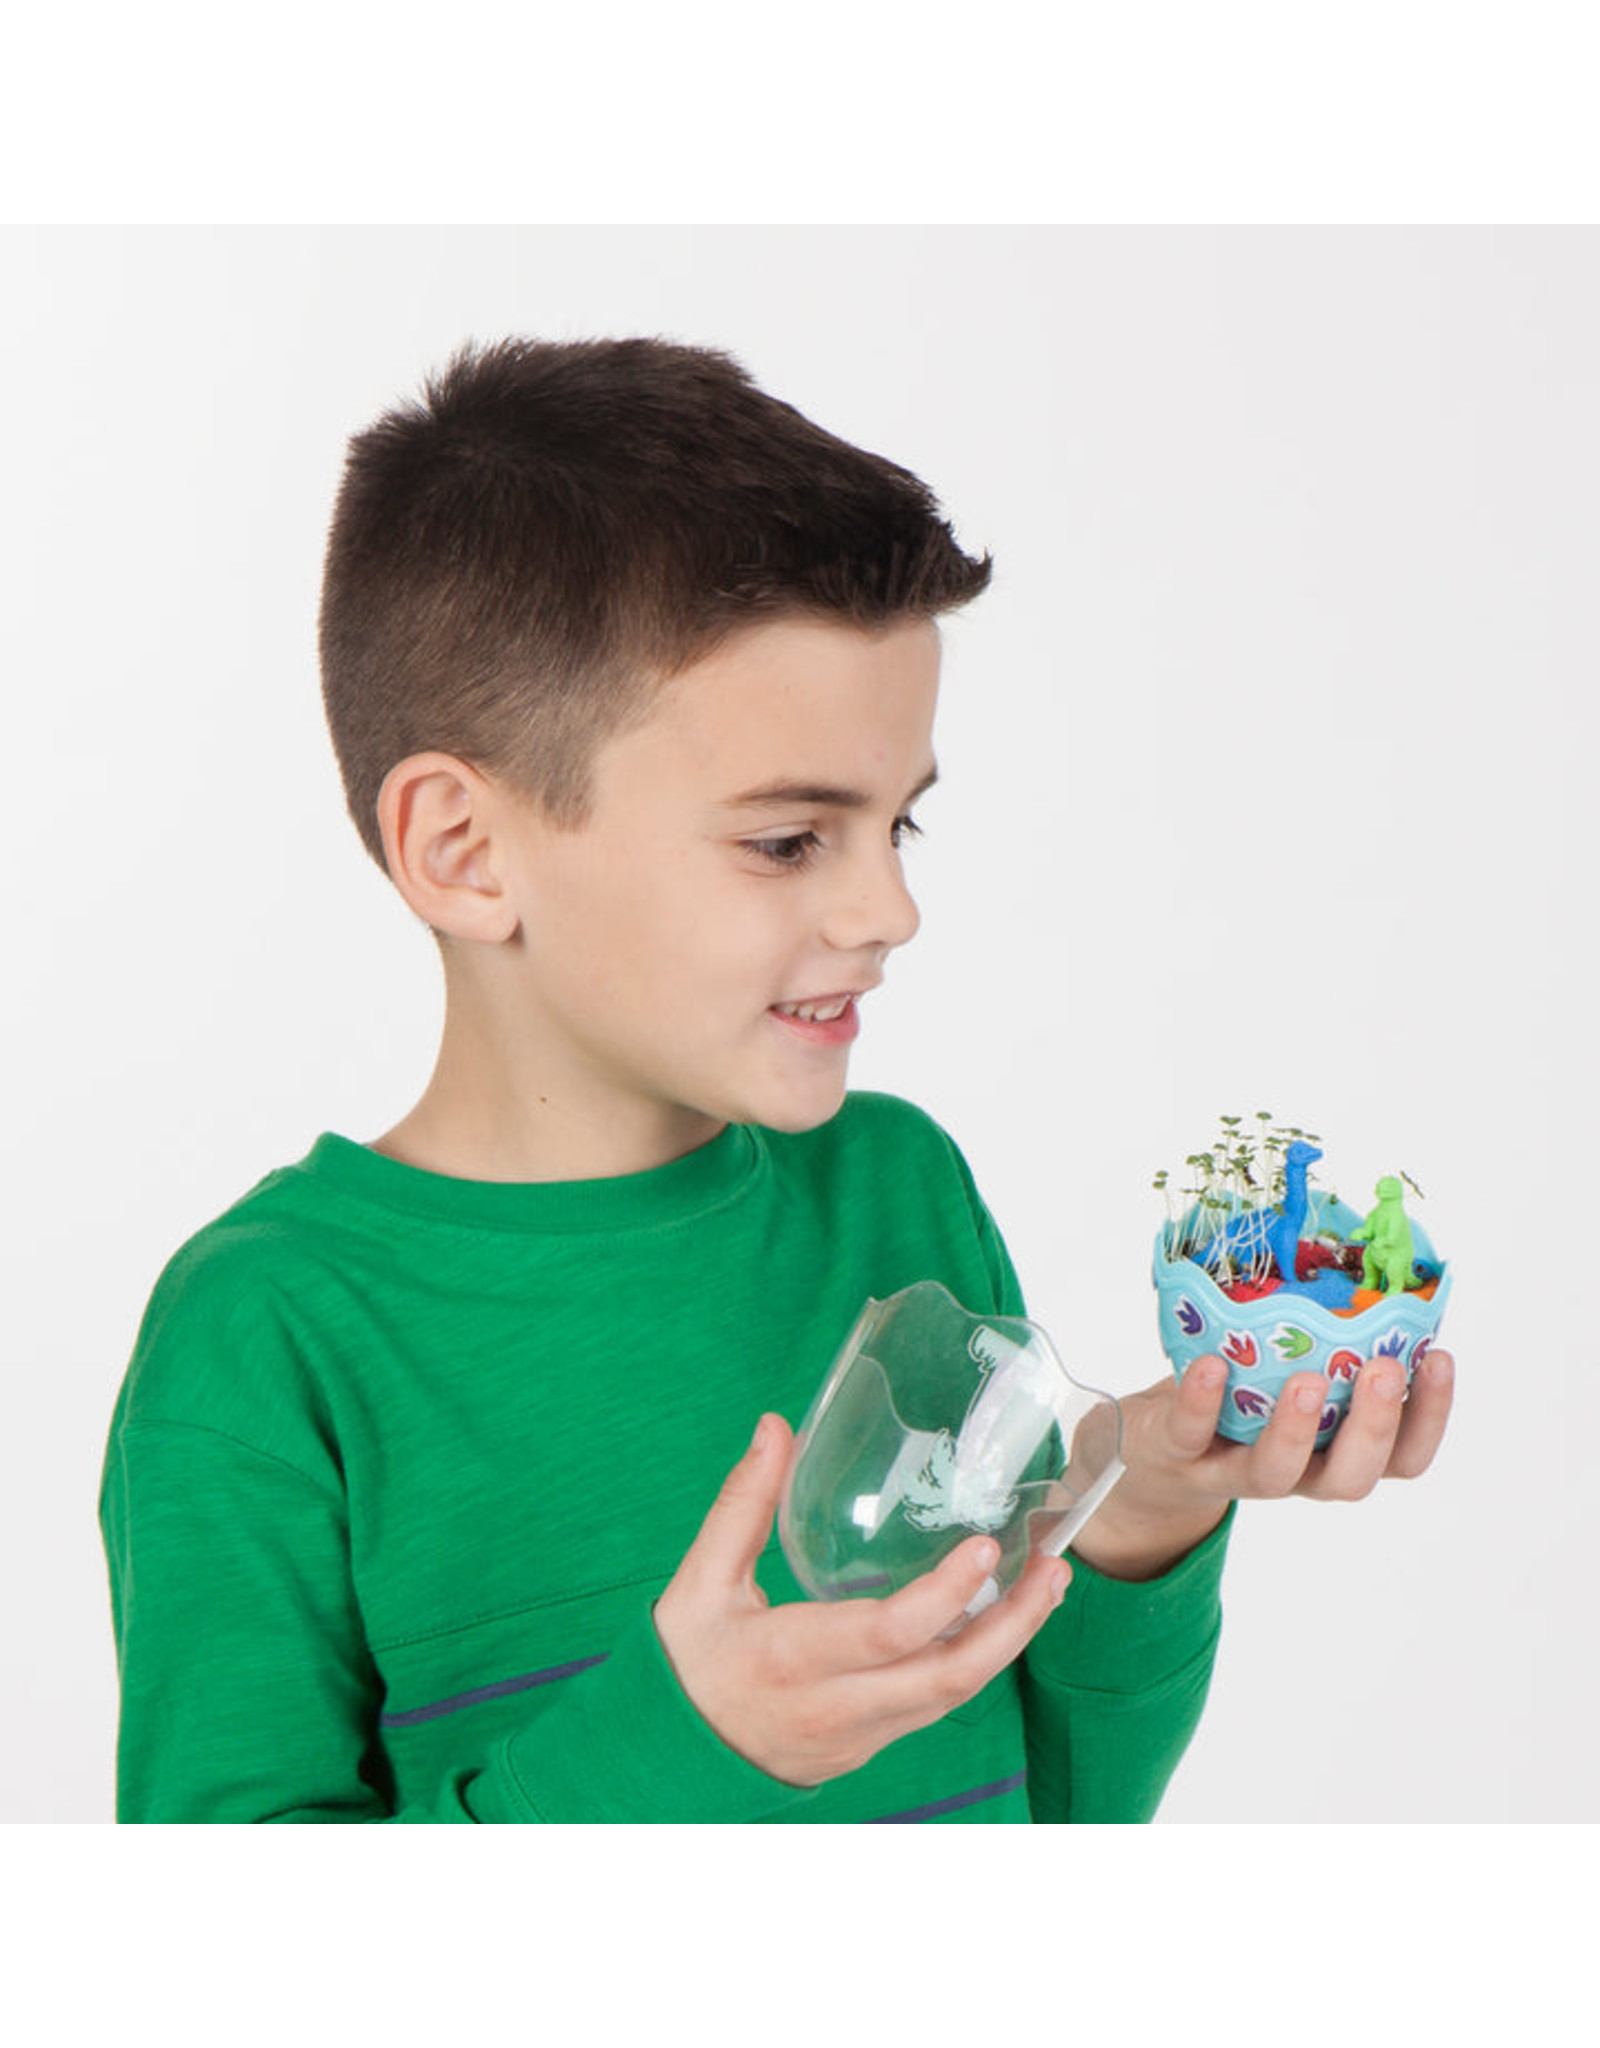 Creativity For Kids Mini Garden - Dinosaur